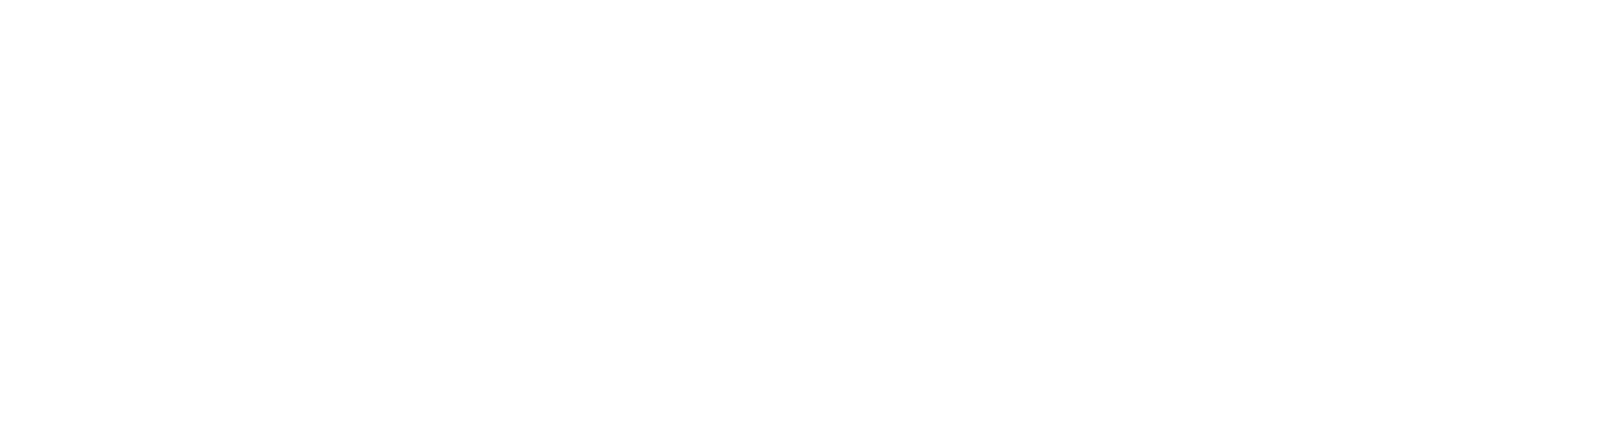 Mt Lofty Ranges Vineyard Scrolled light version of the logo (Link to homepage)